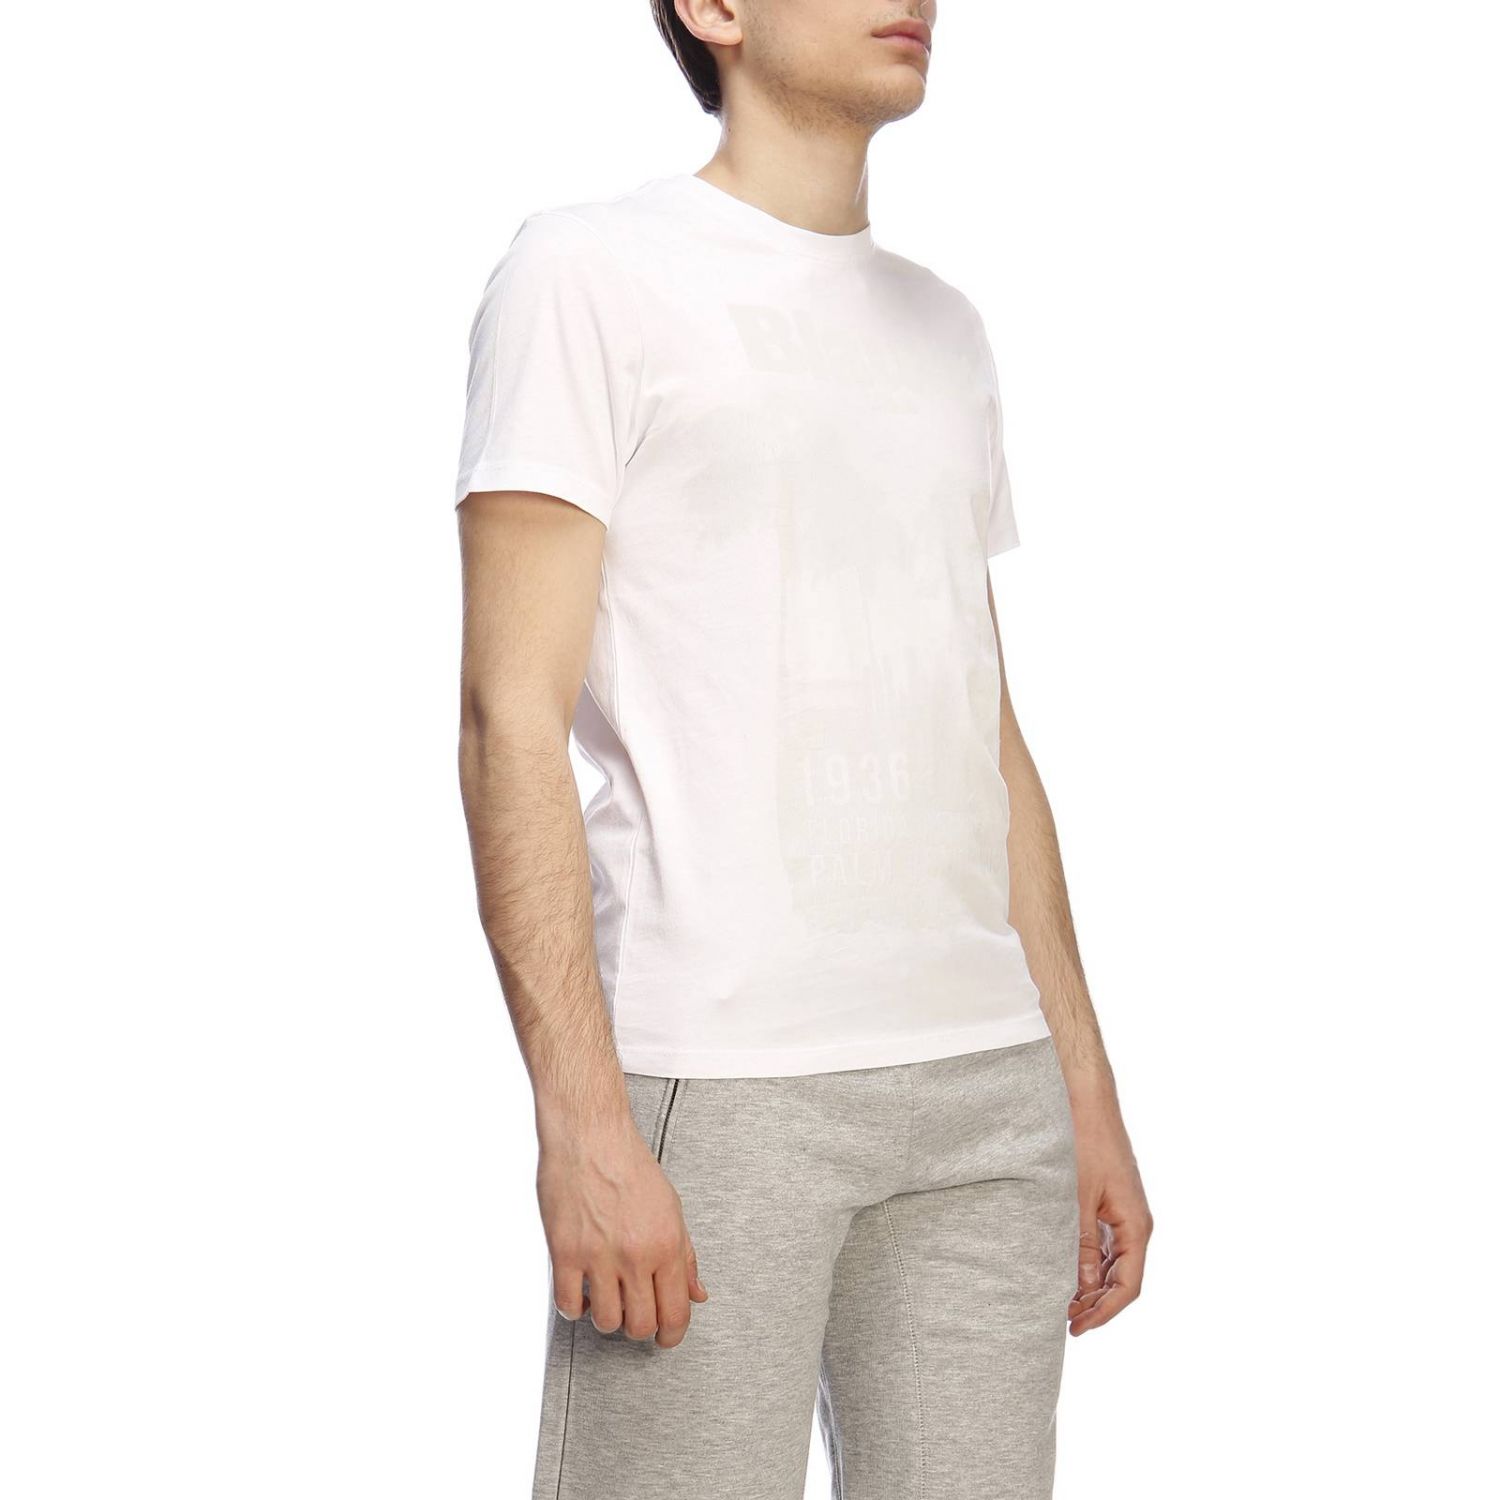 Blauer Outlet: t-shirt for man - White | Blauer t-shirt 19SBLUH02320 ...